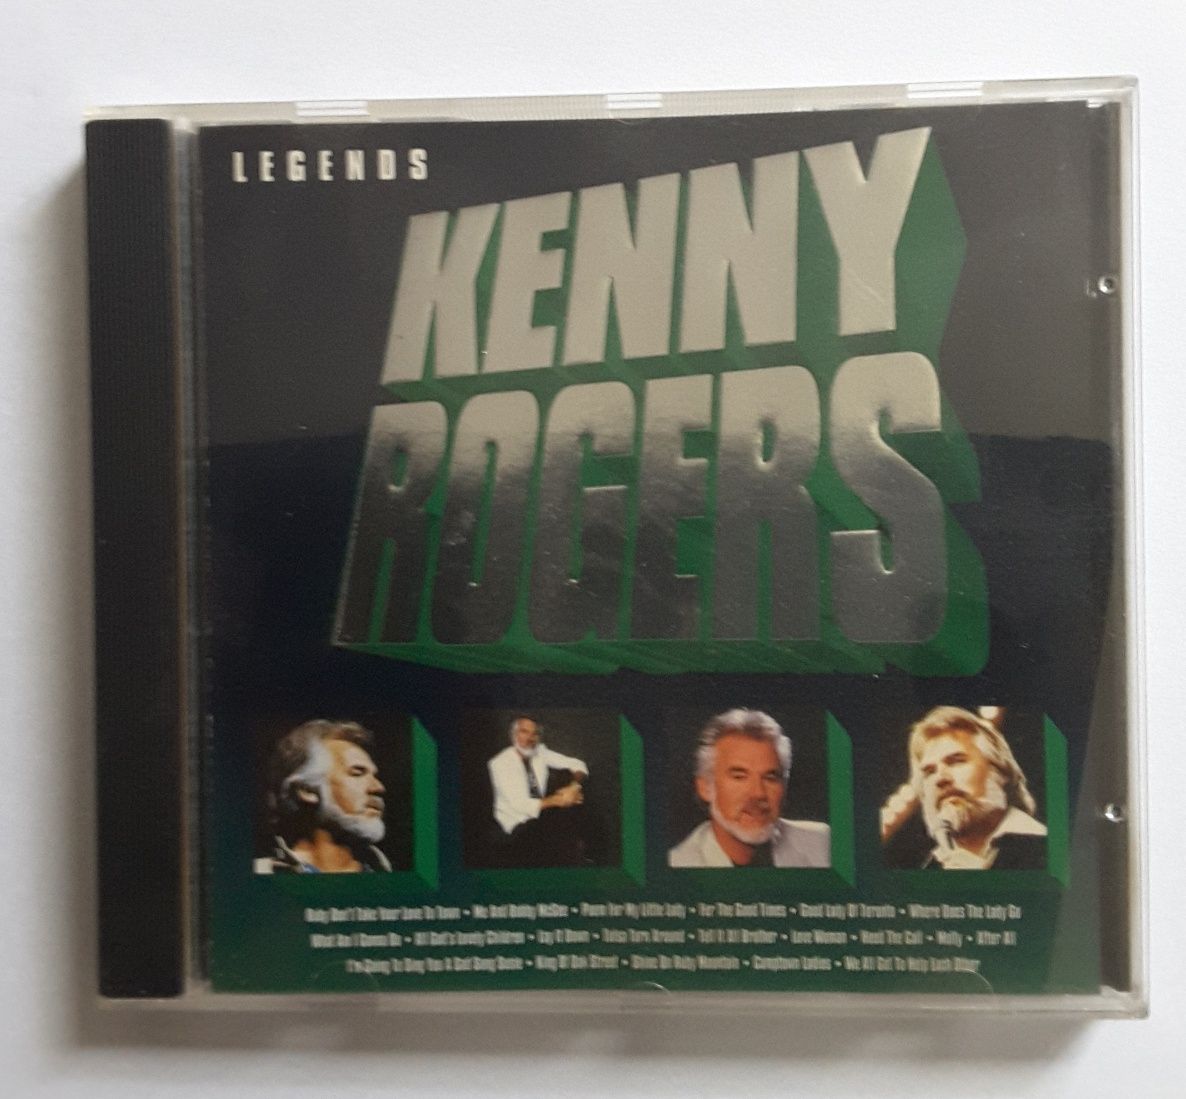 Legends - Kenny Rogers  * CD